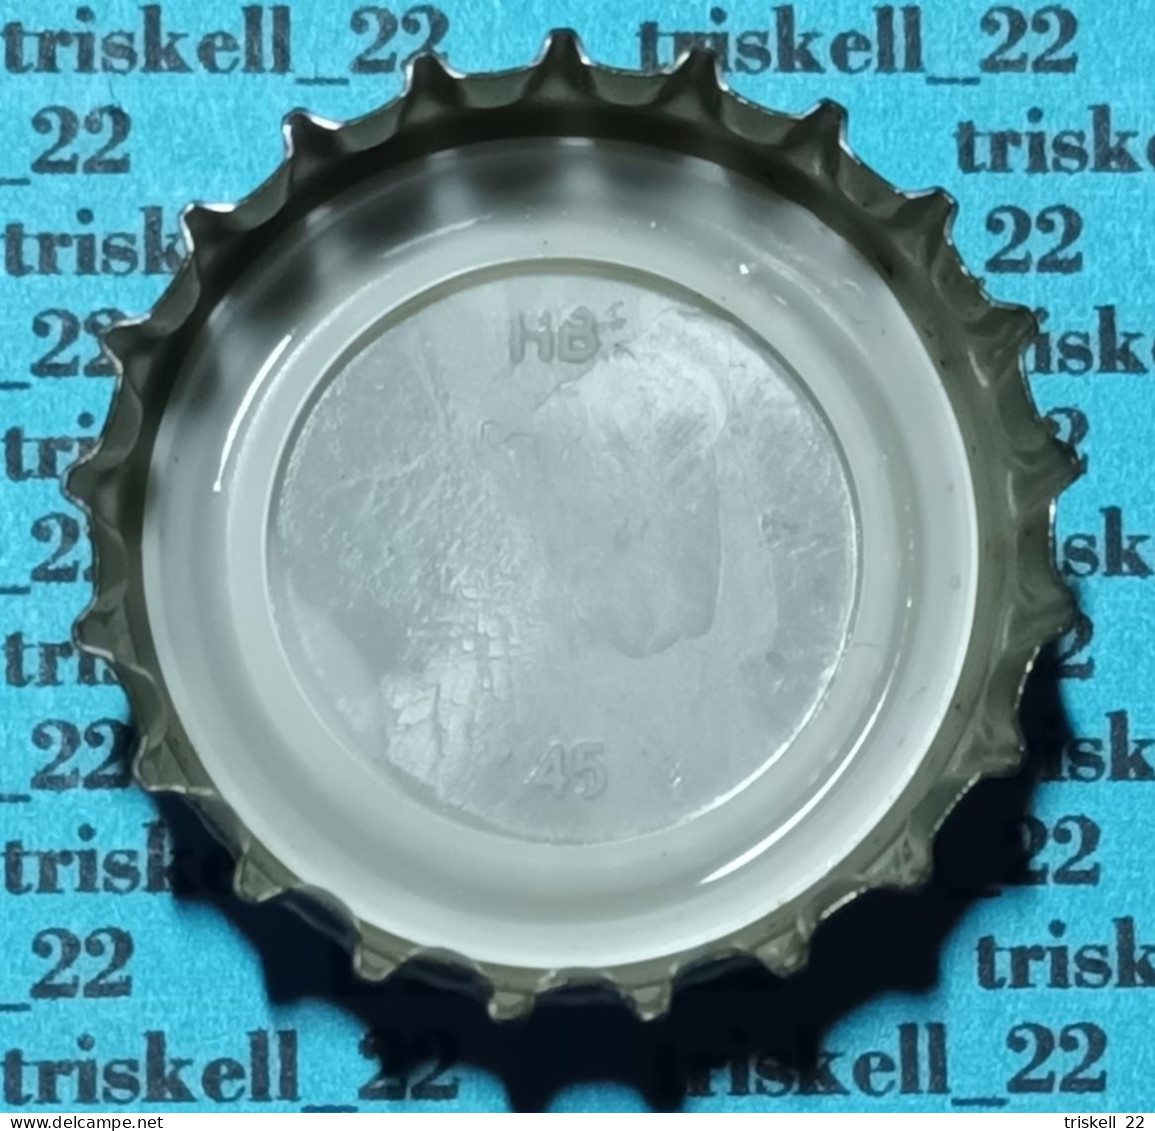 Gulden Draak Classic    Lot N° 40 - Bier